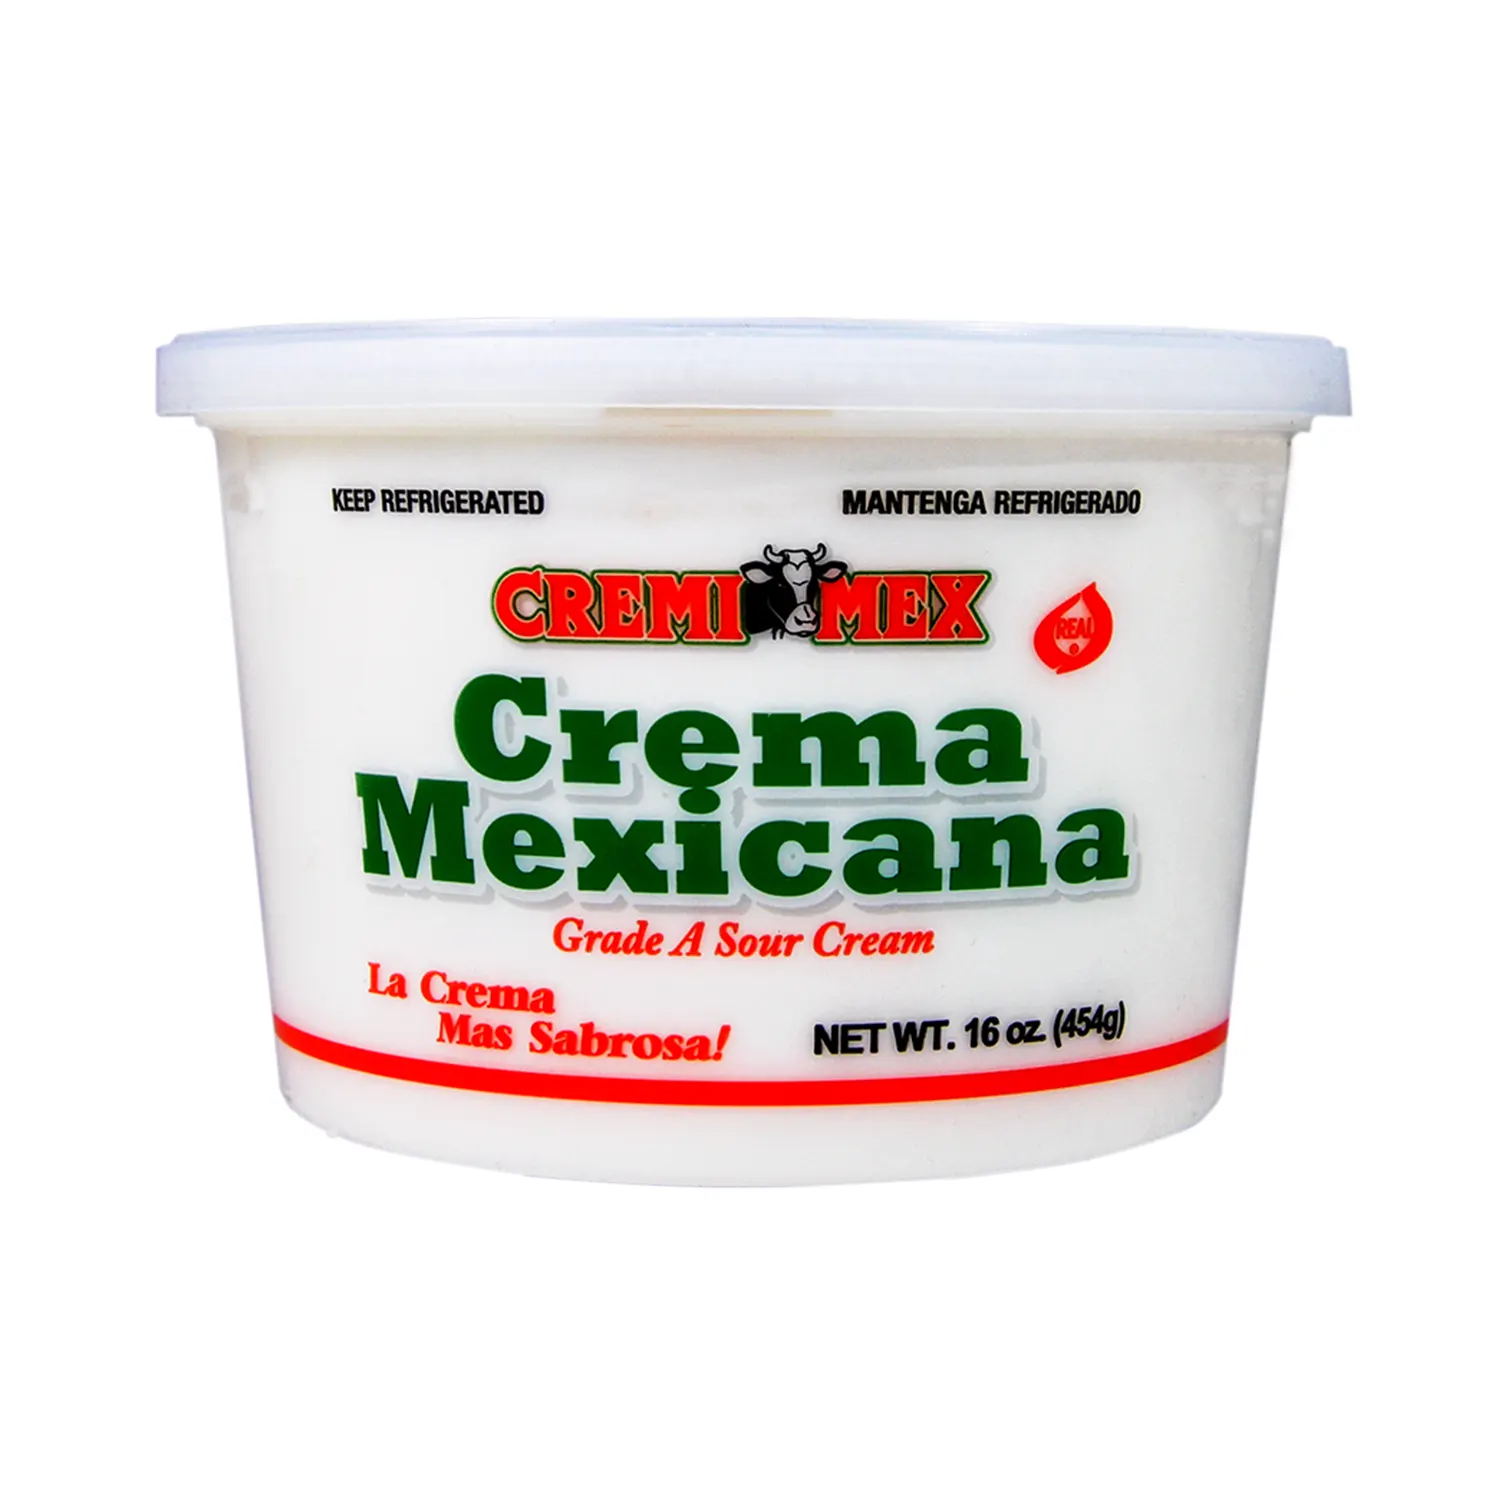 CREMIMEX Crema Mexican Cup 1216 oz